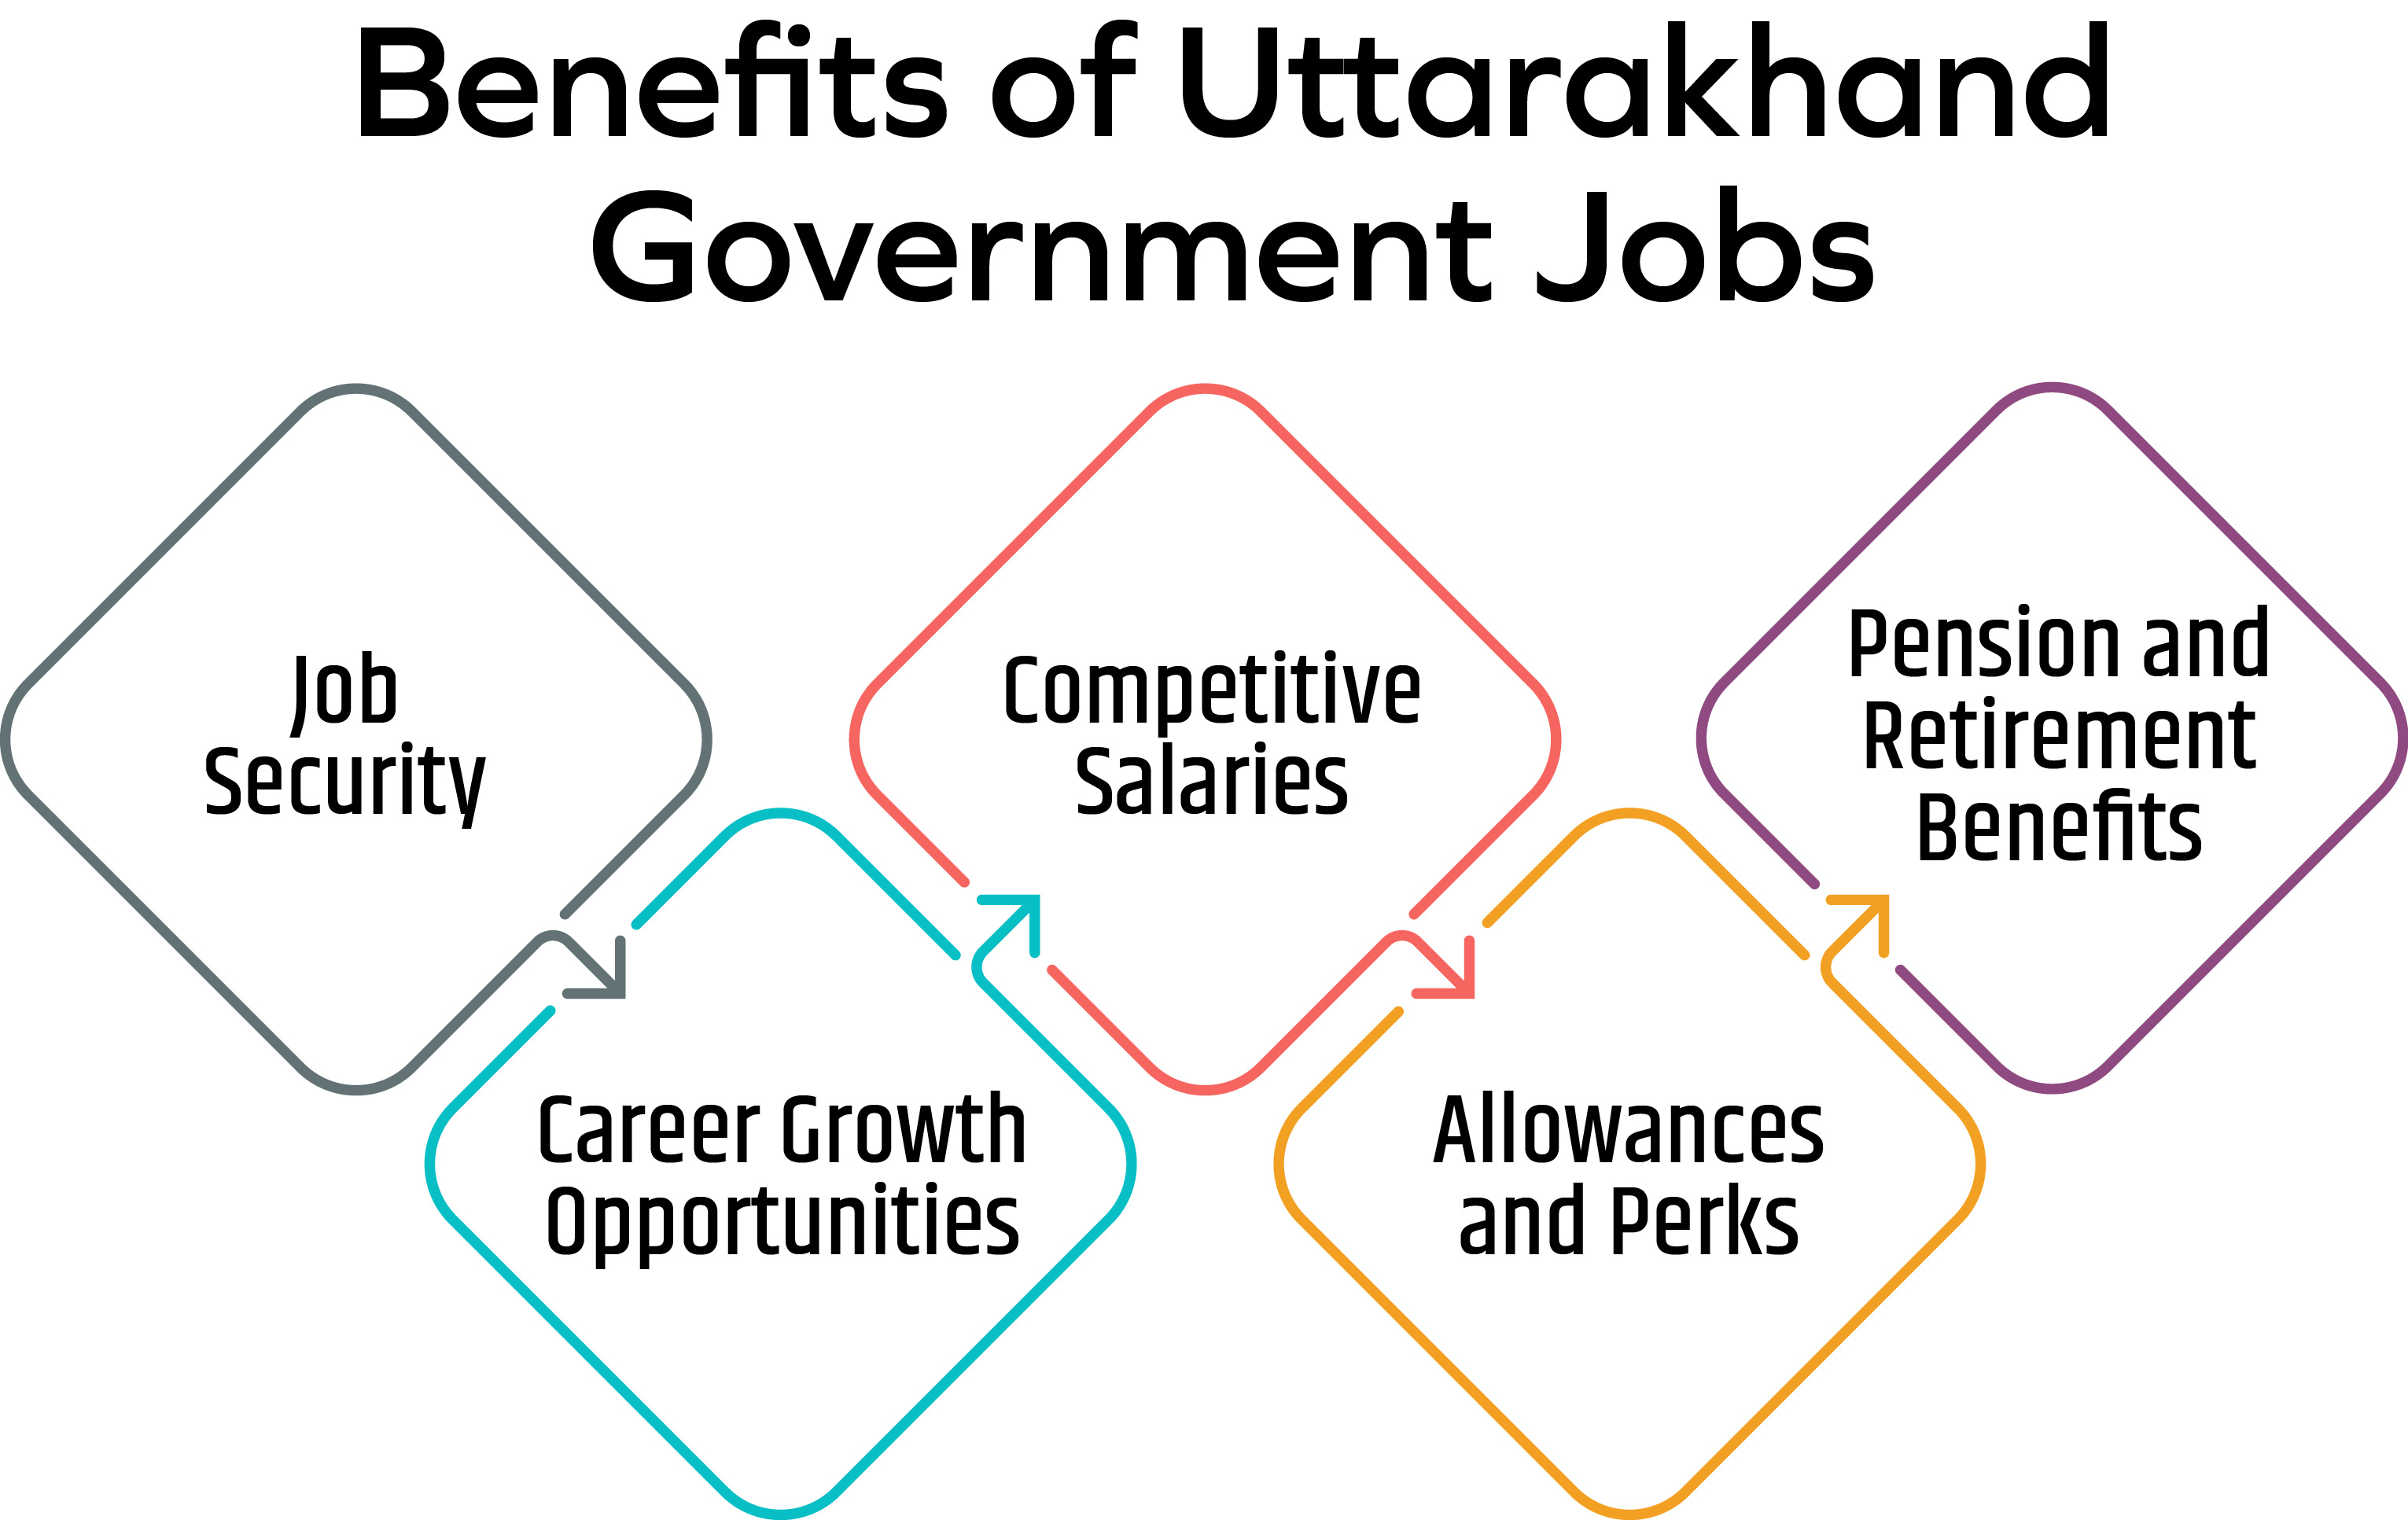 Benefits of Uttarakhand Government Jobs